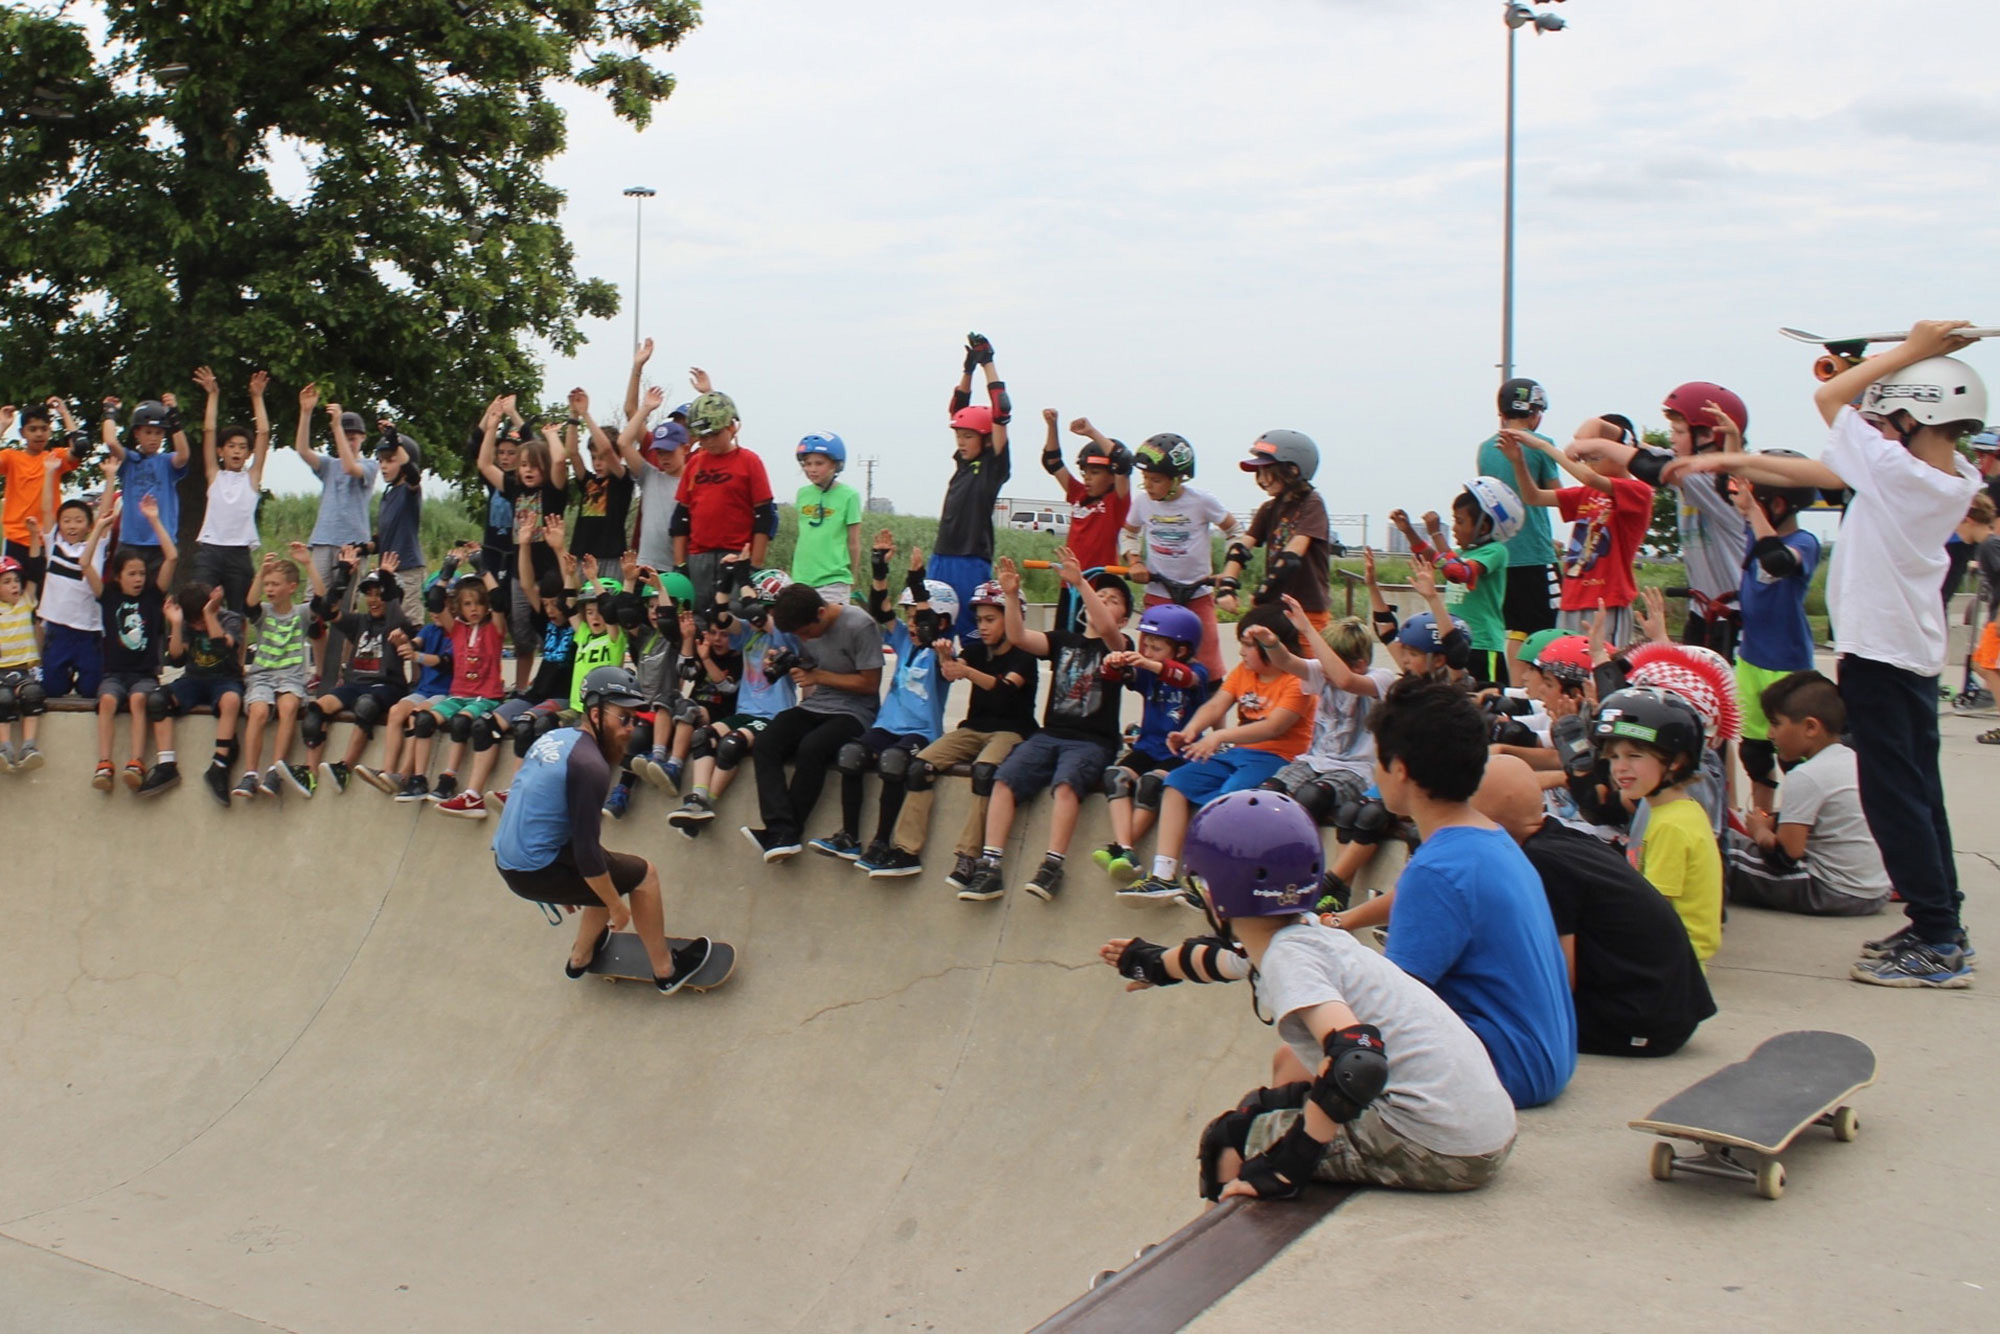 Skateboarding and the Toronto Budget